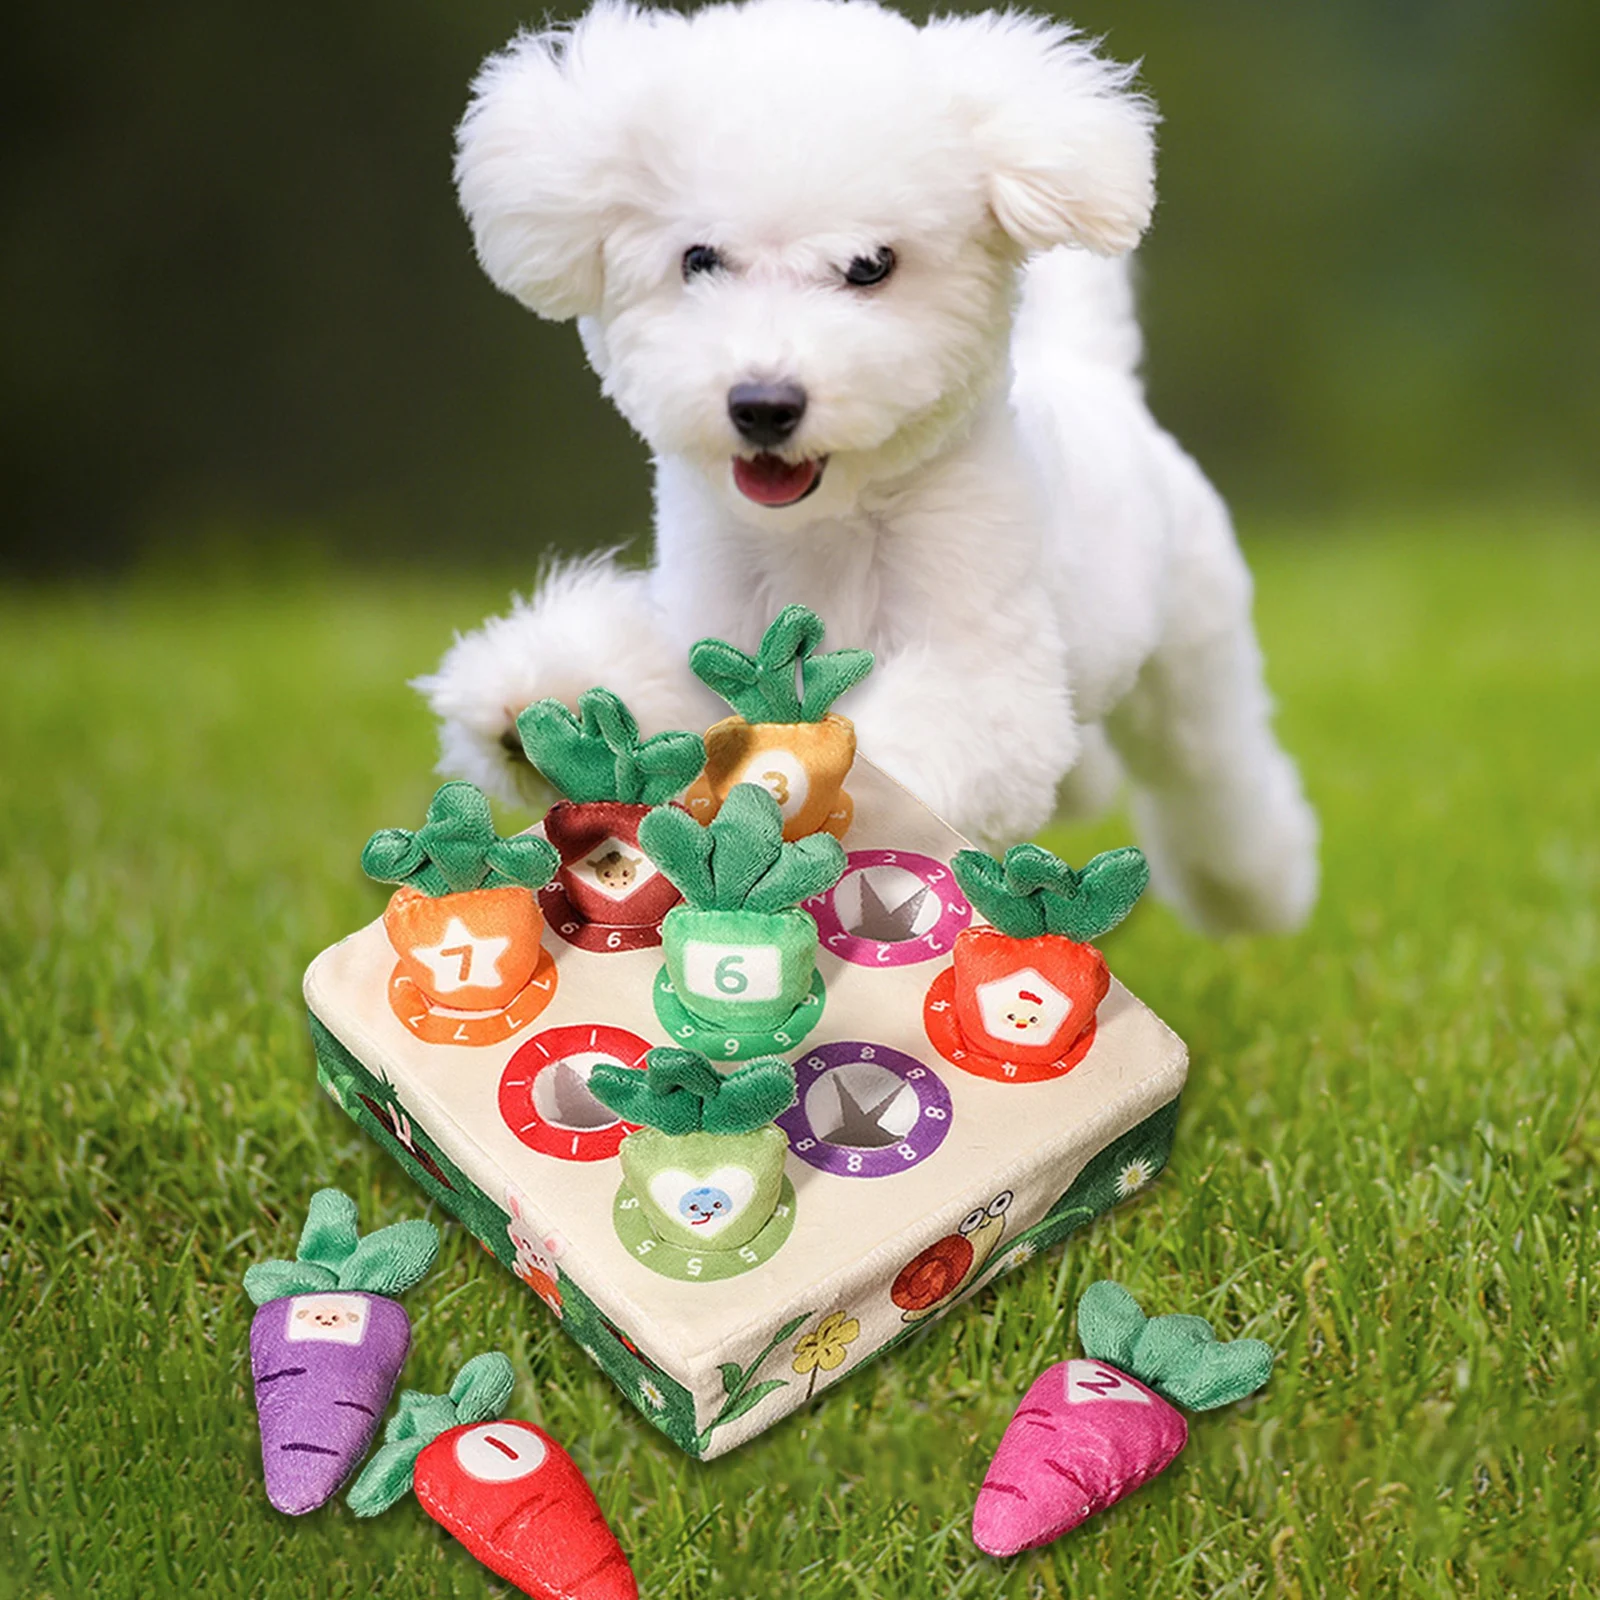 Carrot Farm Dog Toys Including 12 Carrots - Dog Puzzle Toys, Plush Carrot  Dog Toys, Dog Chewing Toys for Small Dog Puppy, Pet Plush Training Toys,  Dog